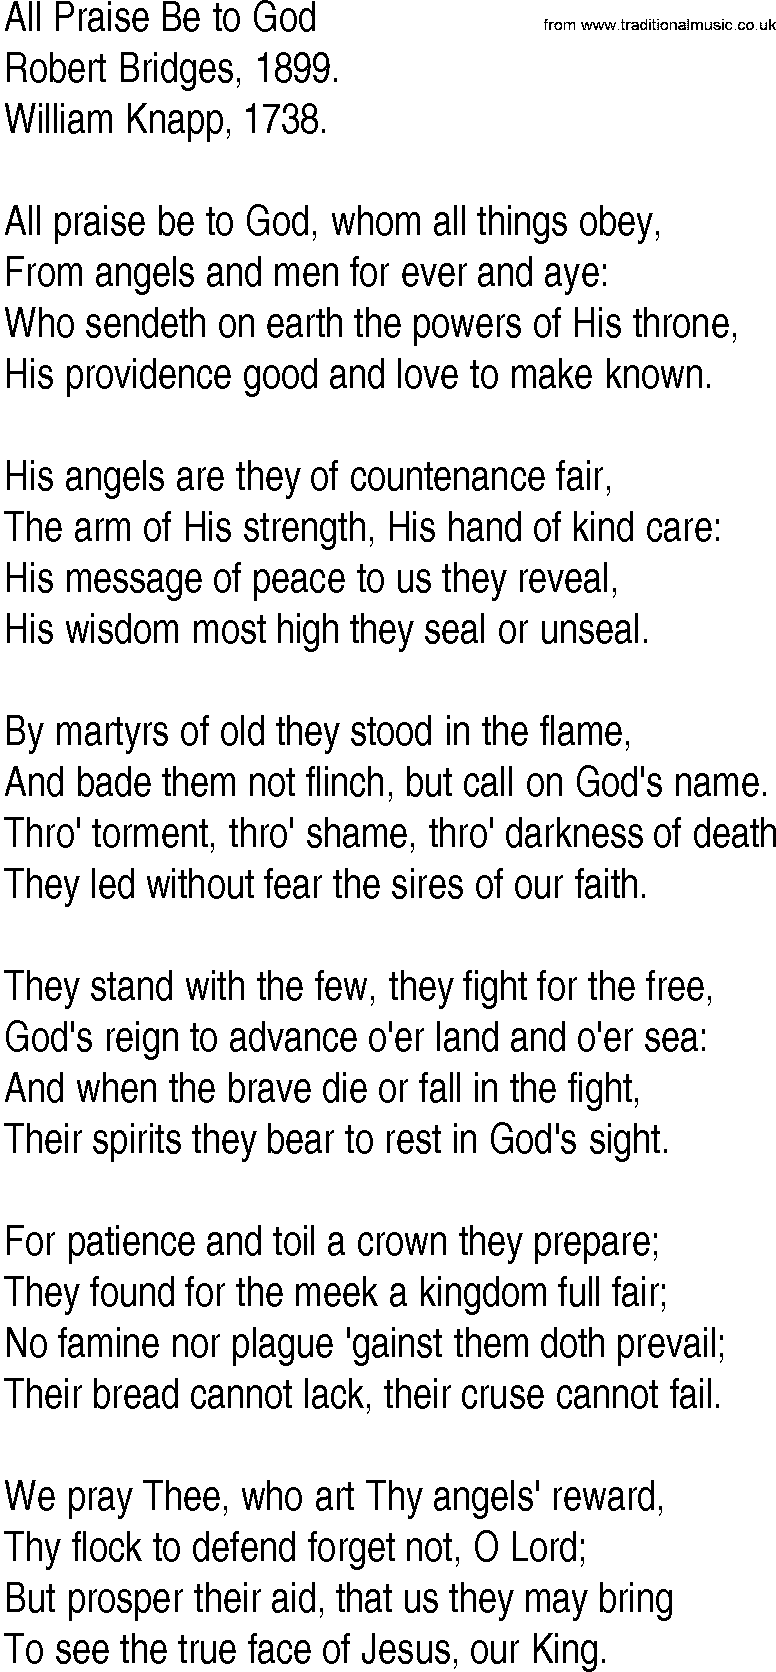 Hymn and Gospel Song: All Praise Be to God by Robert Bridges lyrics